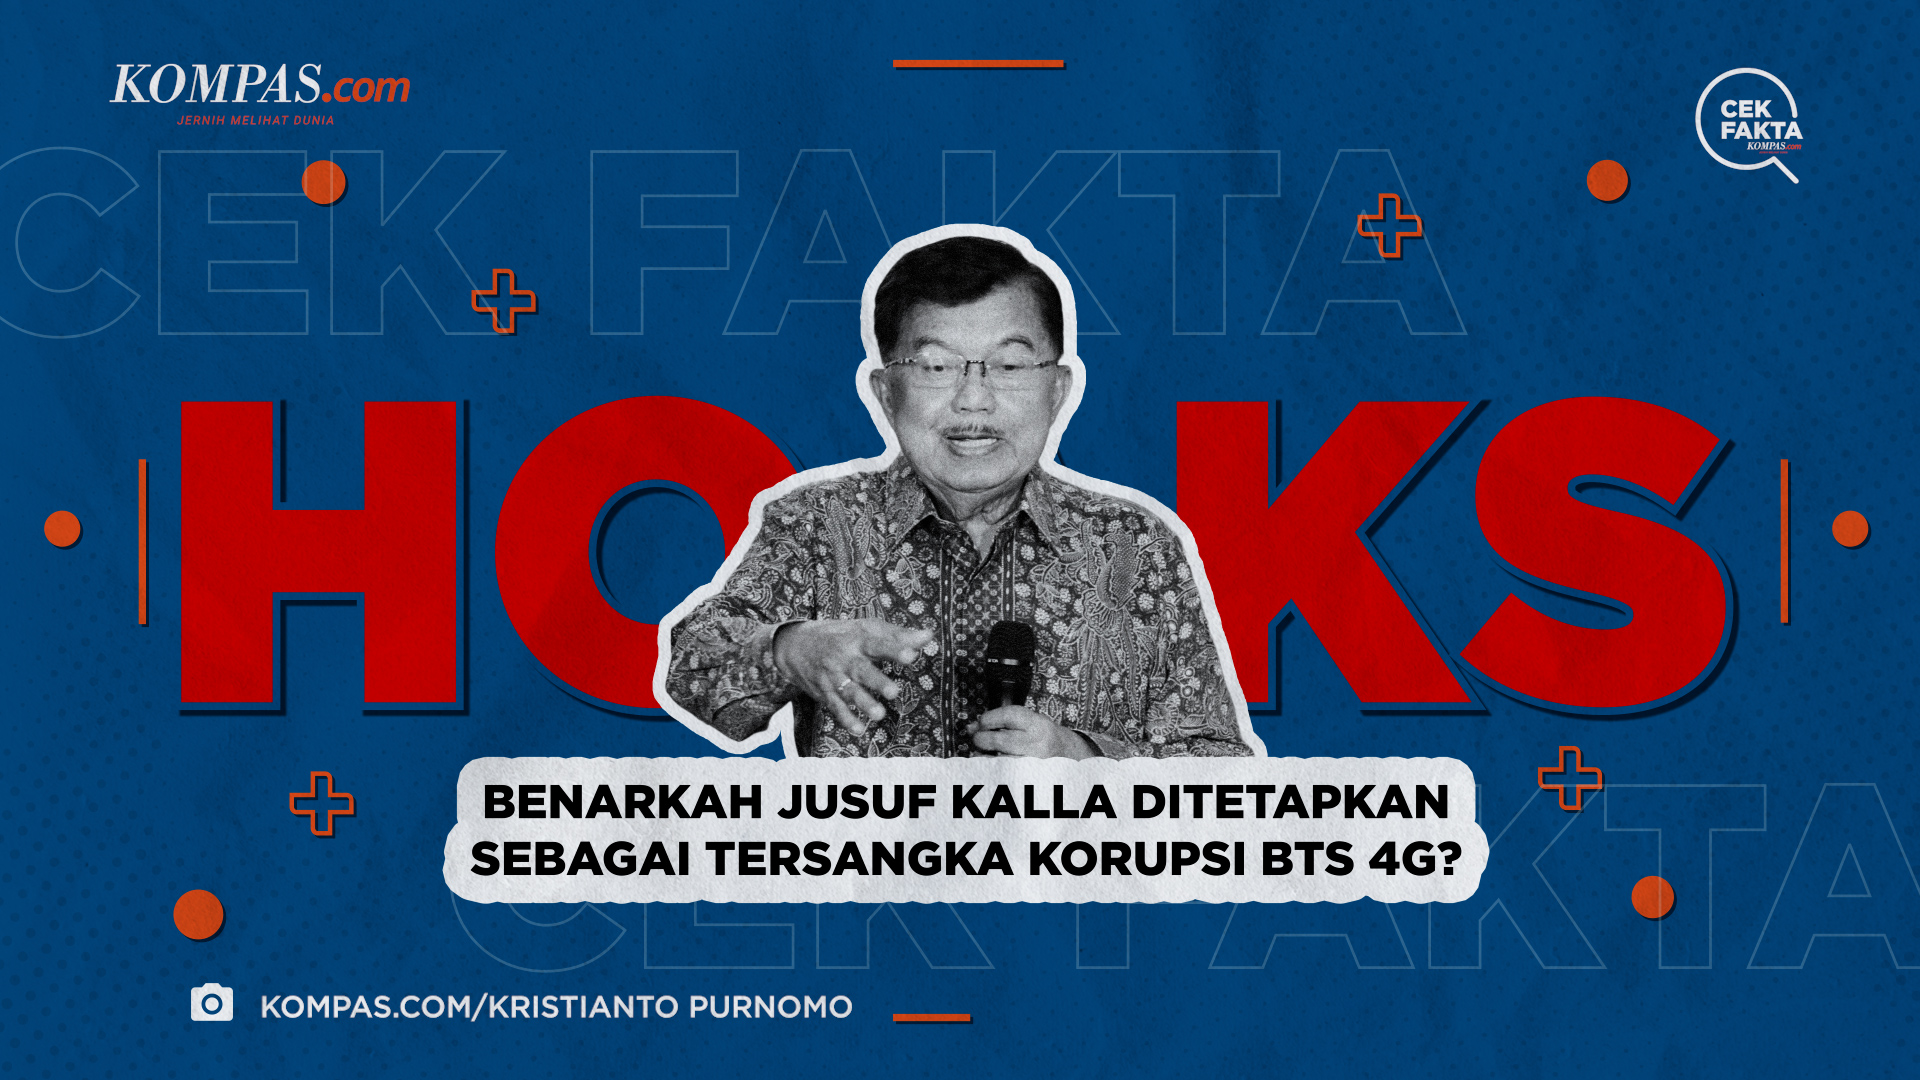 Benarkah Jusuf Kalla Ditetapkan sebagai Tersangka Korupsi BTS 4G?